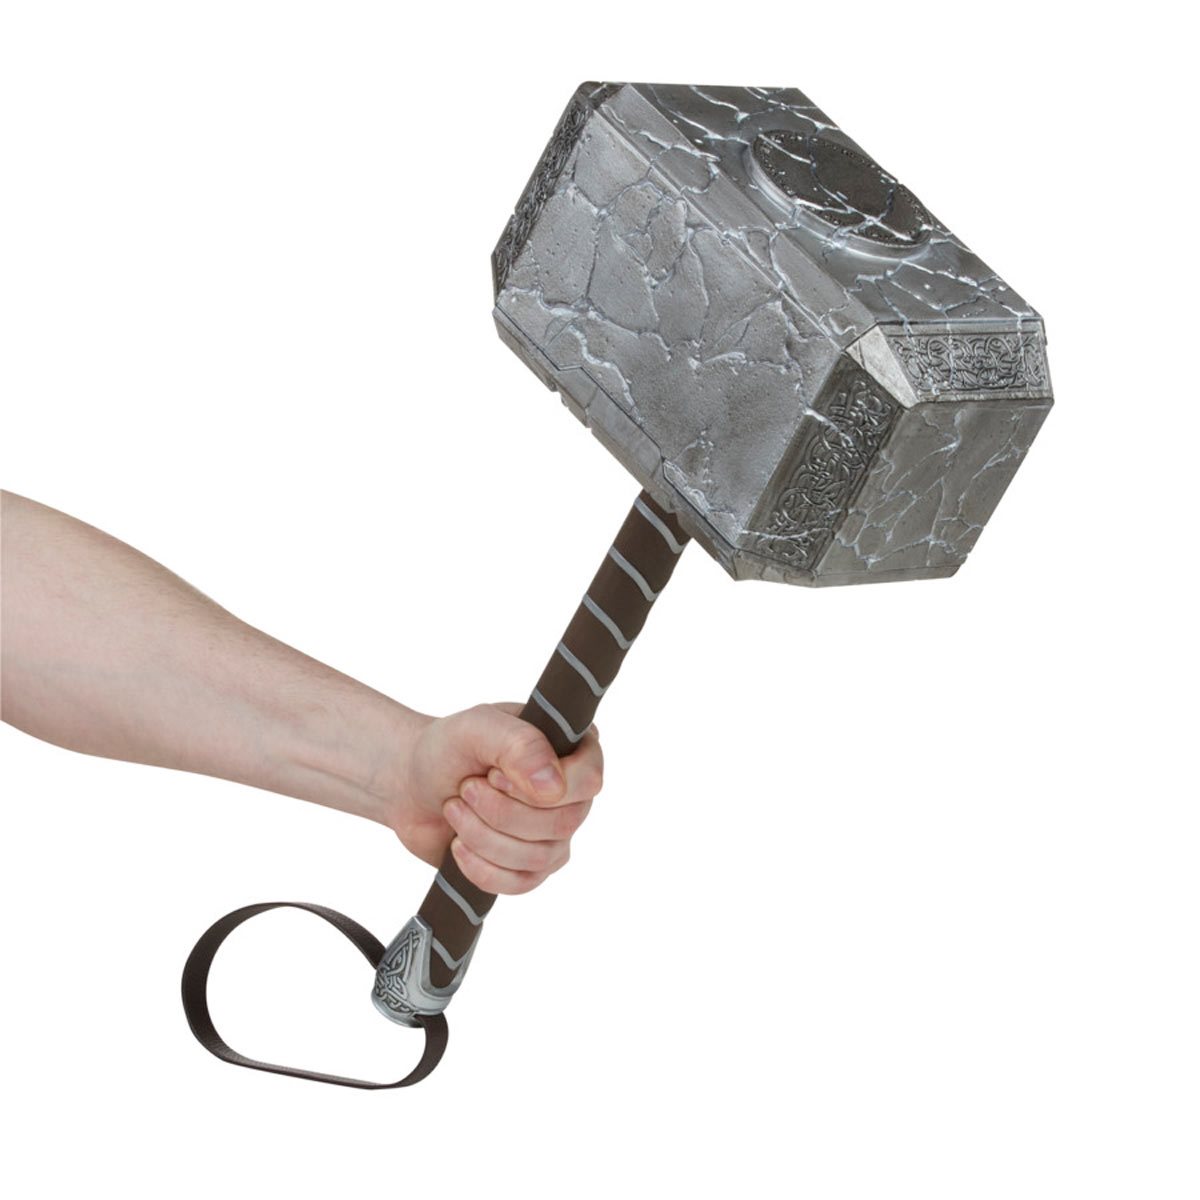 Esta réplica oficial del Mjolnir demostrará si eres digno de levantar el  martillo de Thor, aunque cuesta 129 euros